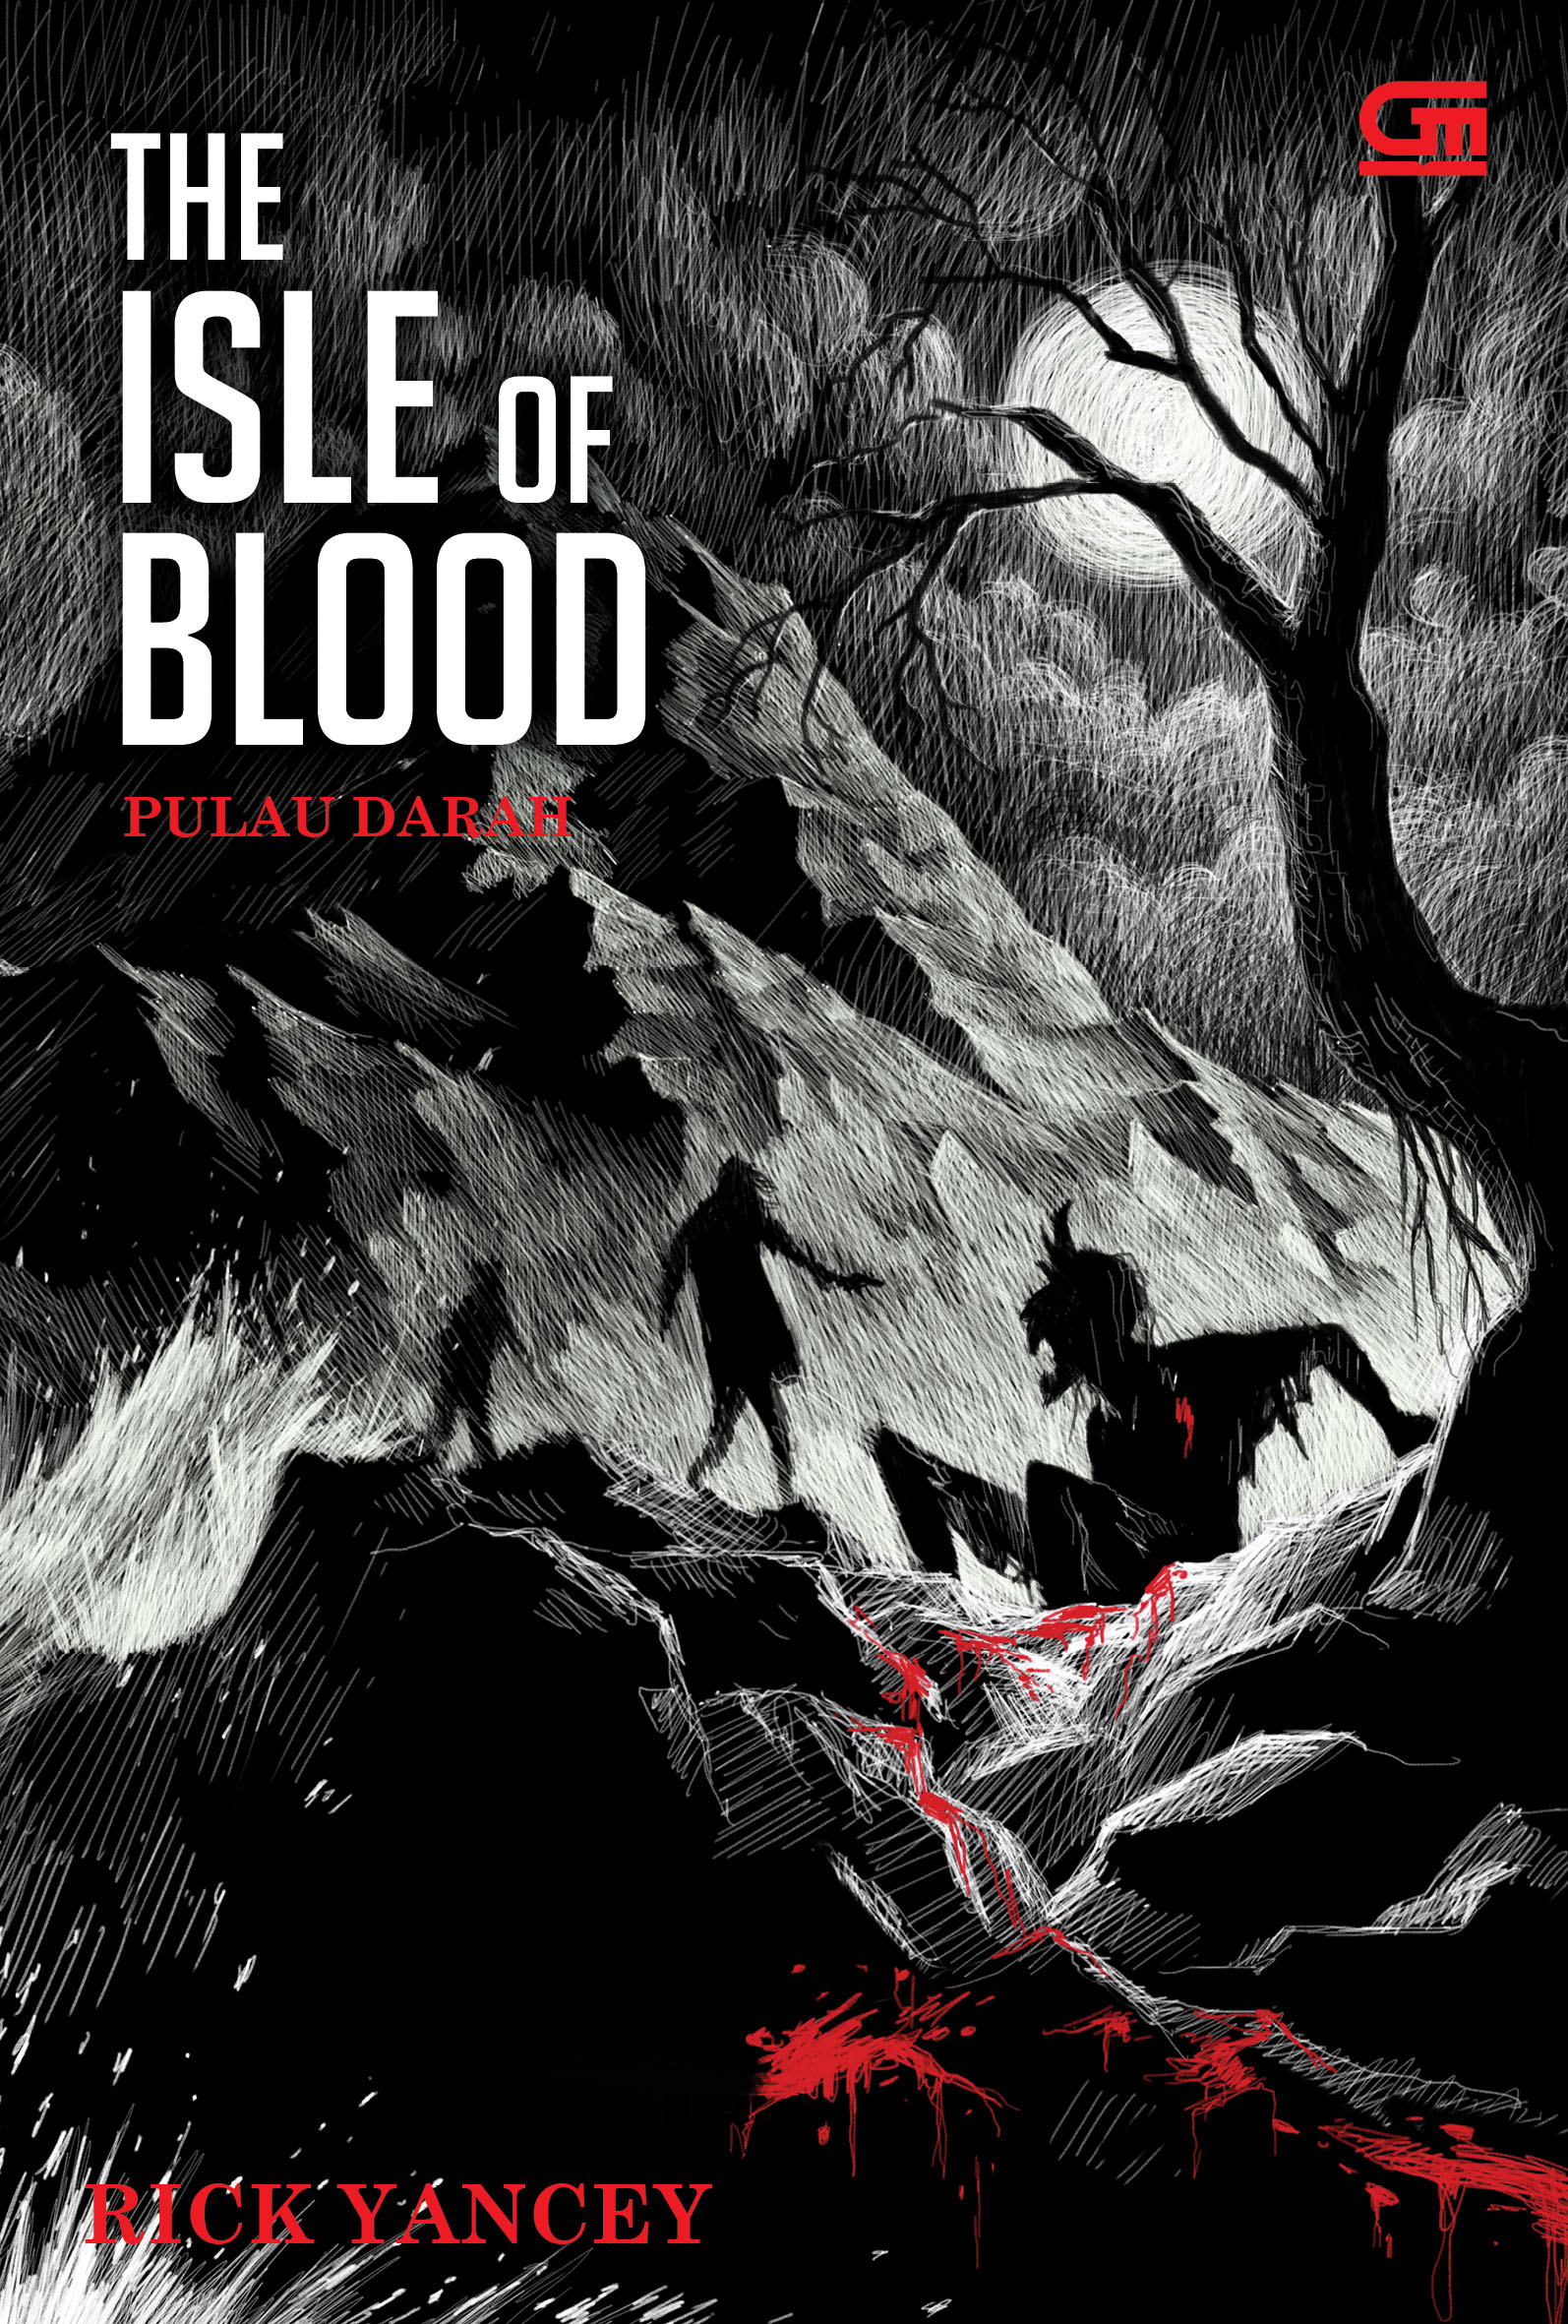  The Monstrumologist #3: Pulau Darah (The Isle of Blood)